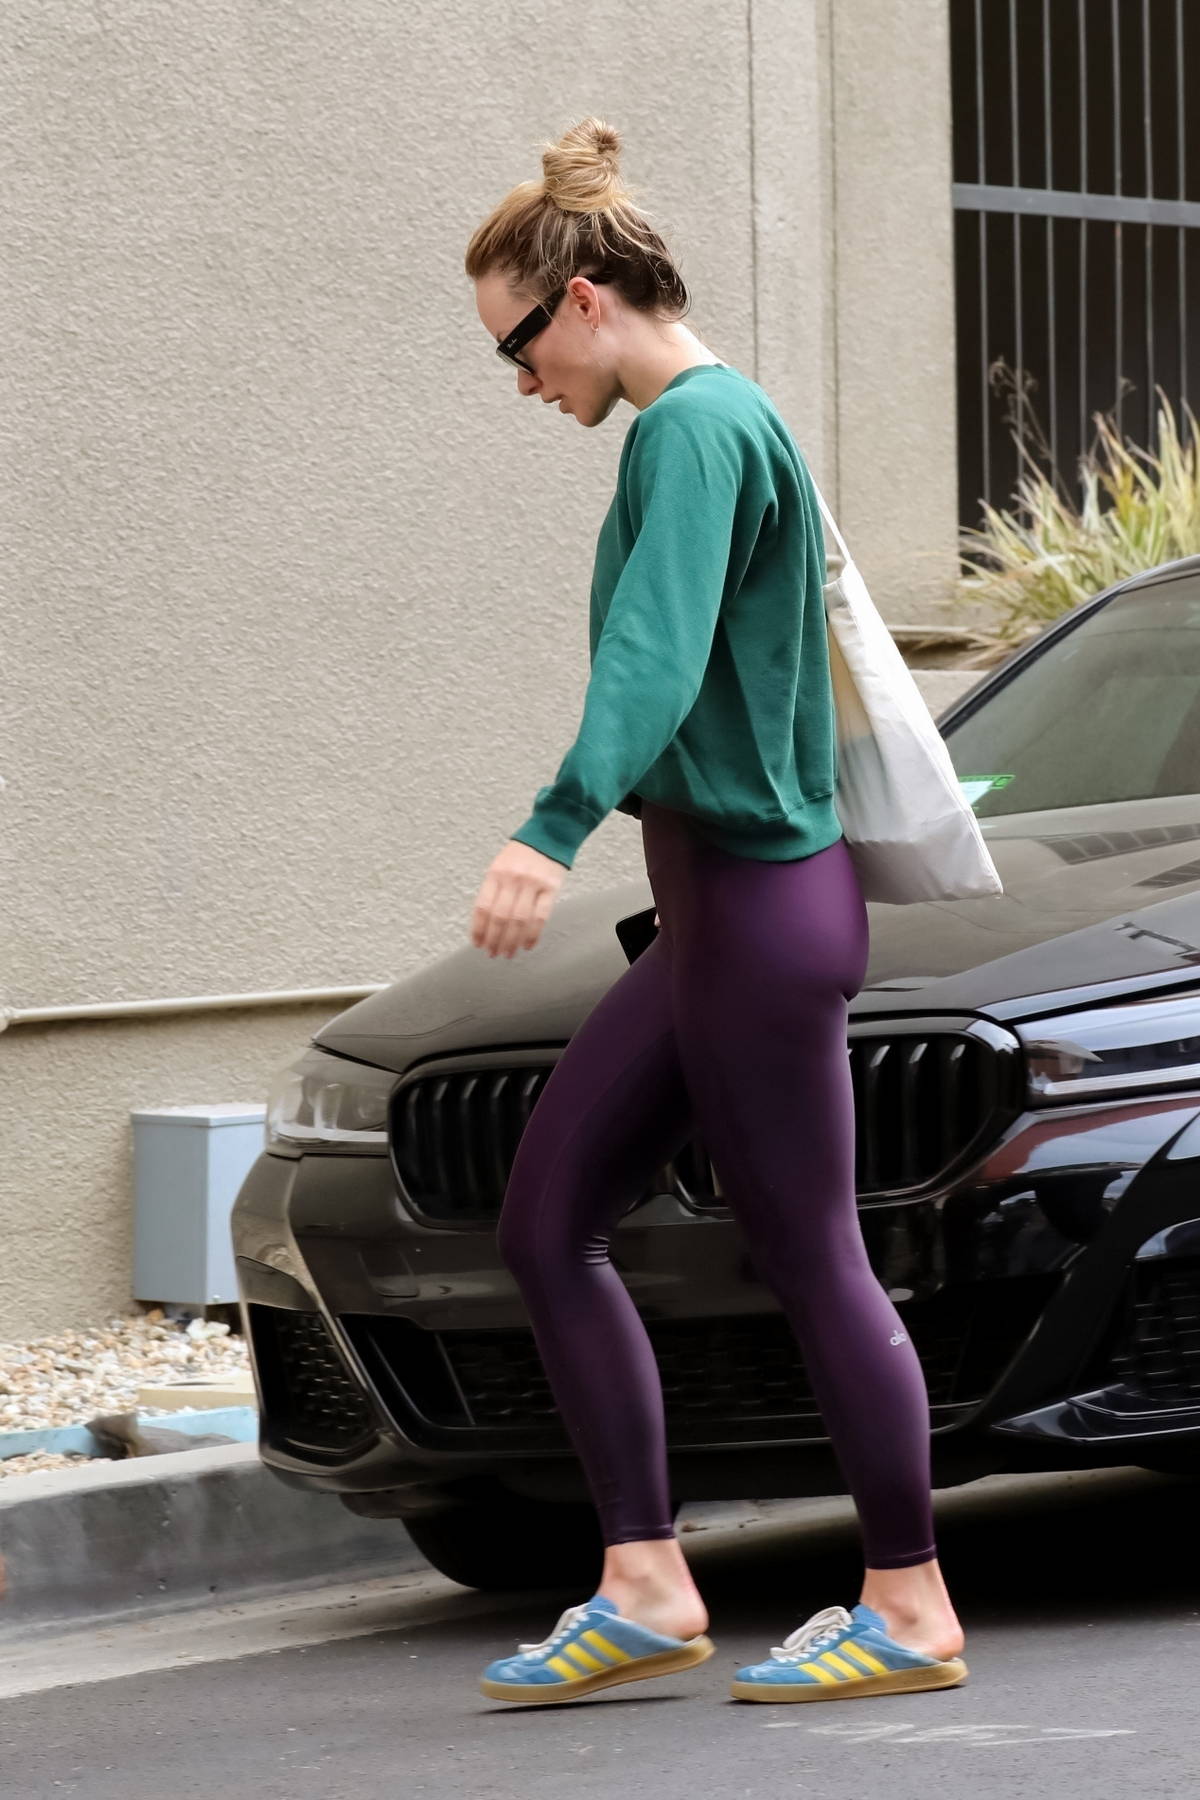 Olivia Wilde sports a green sweatshirt and purple leggings as she